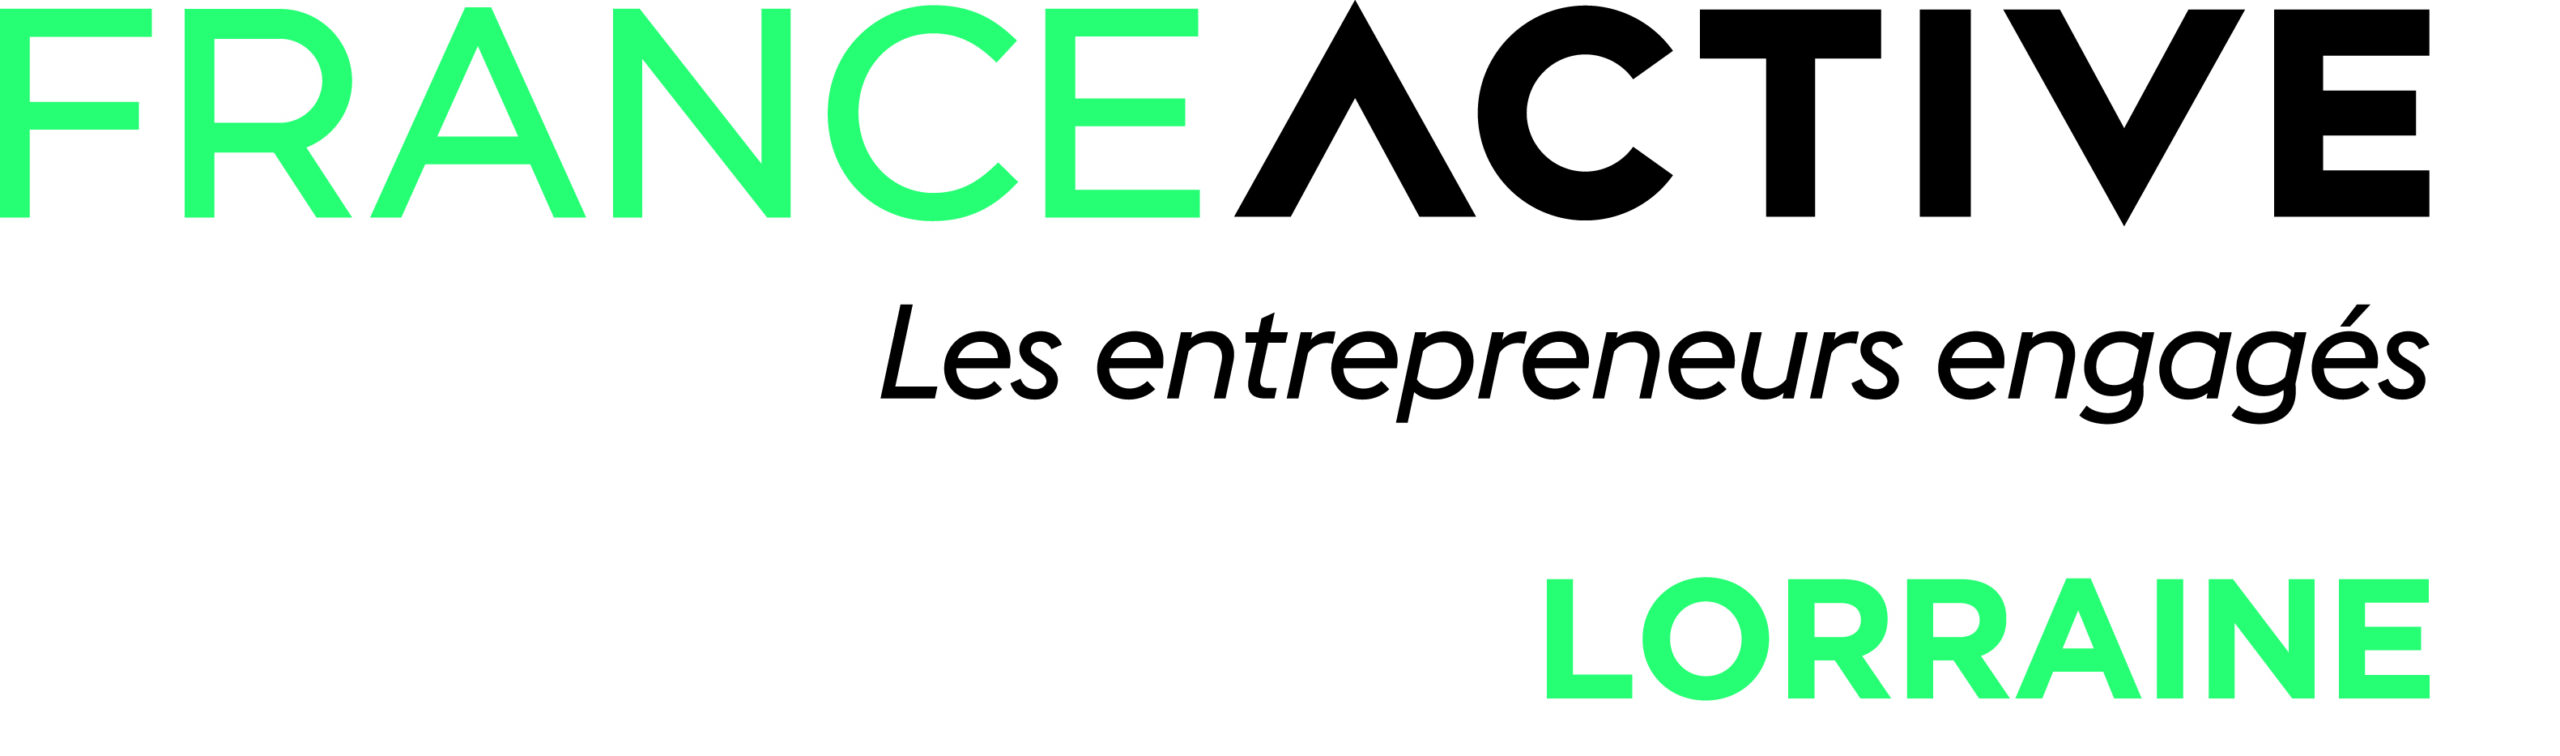 France Active Lorraine (logo)